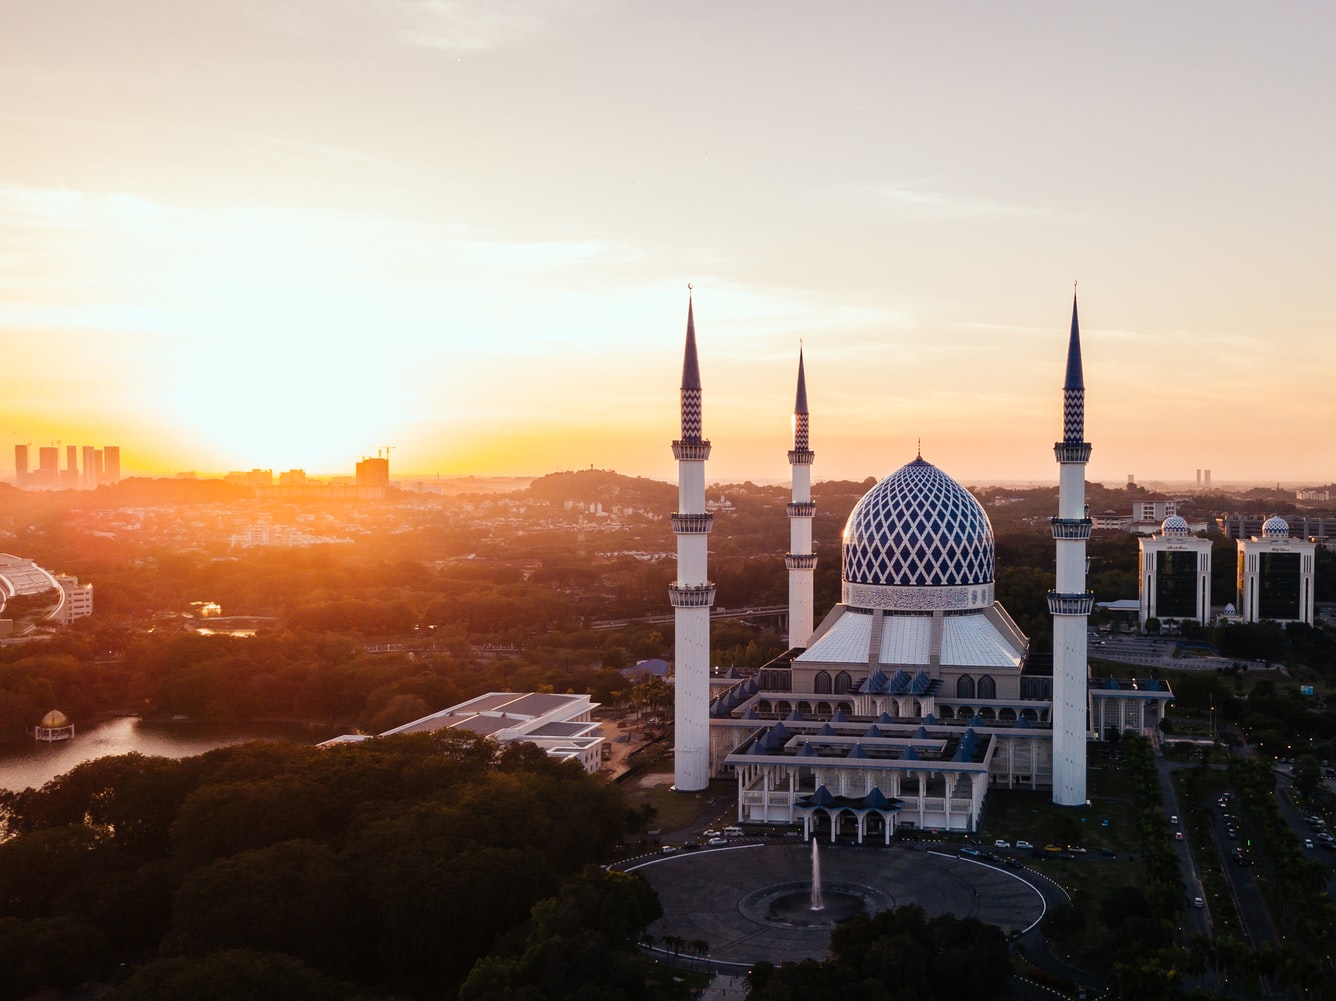 Kerajaan Selangor Akan Mula Membangunkan Infrastruktur Gentian Optik Yang Meliputi Seluruh Negeri Pada Suku Keempat 2019